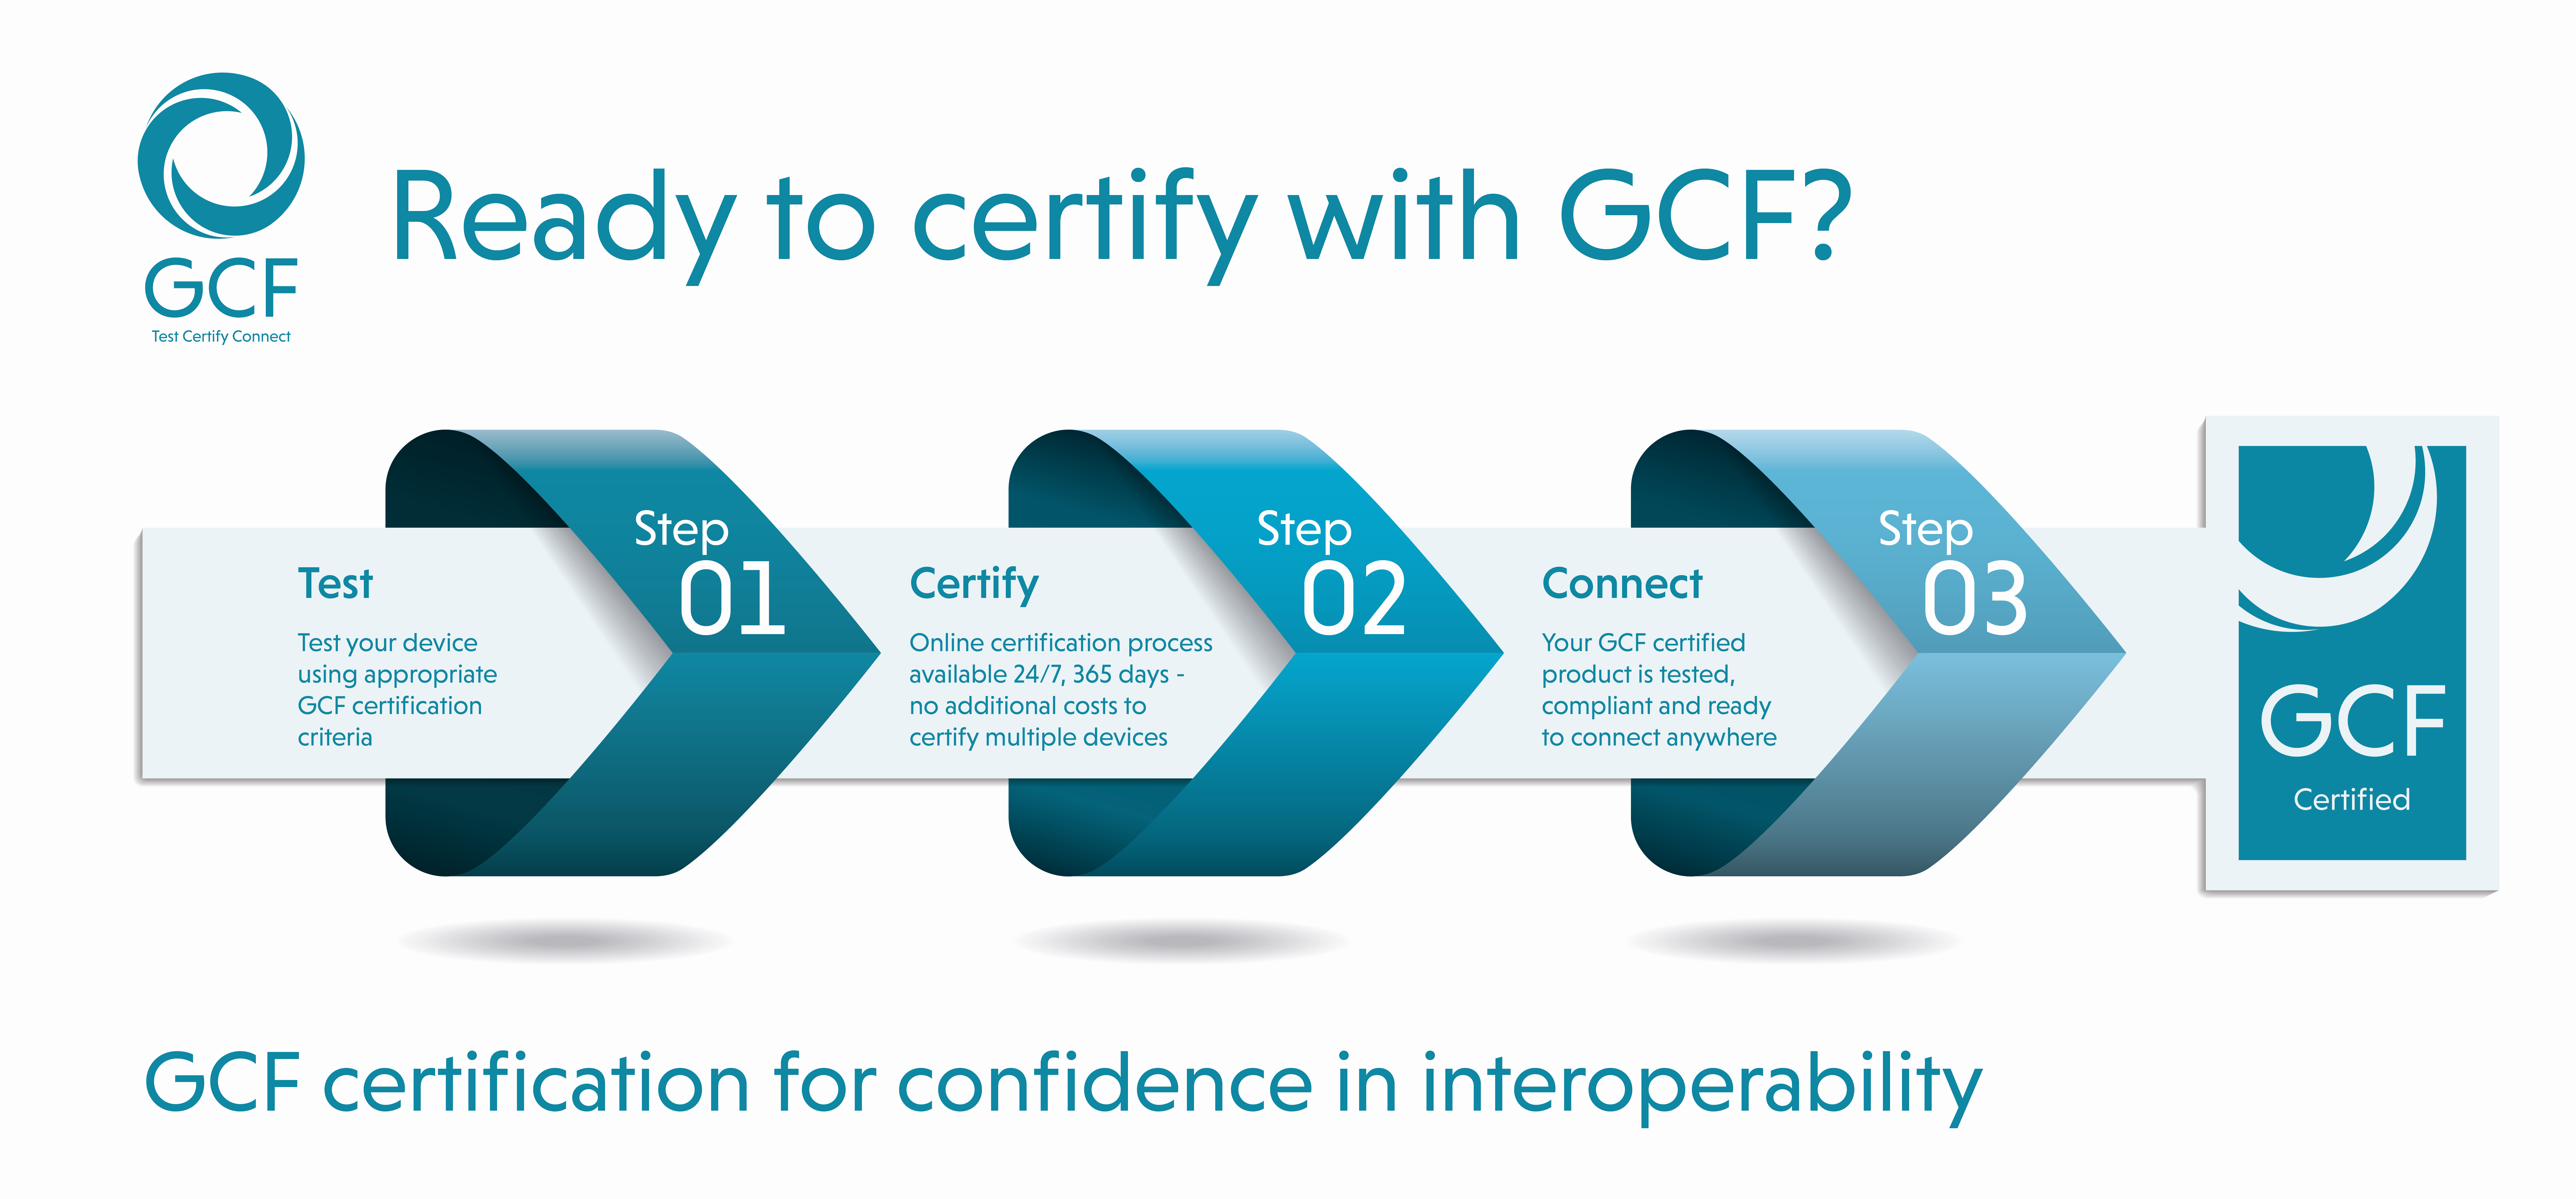 GCF Certification Infographic FINAL hi-res.png